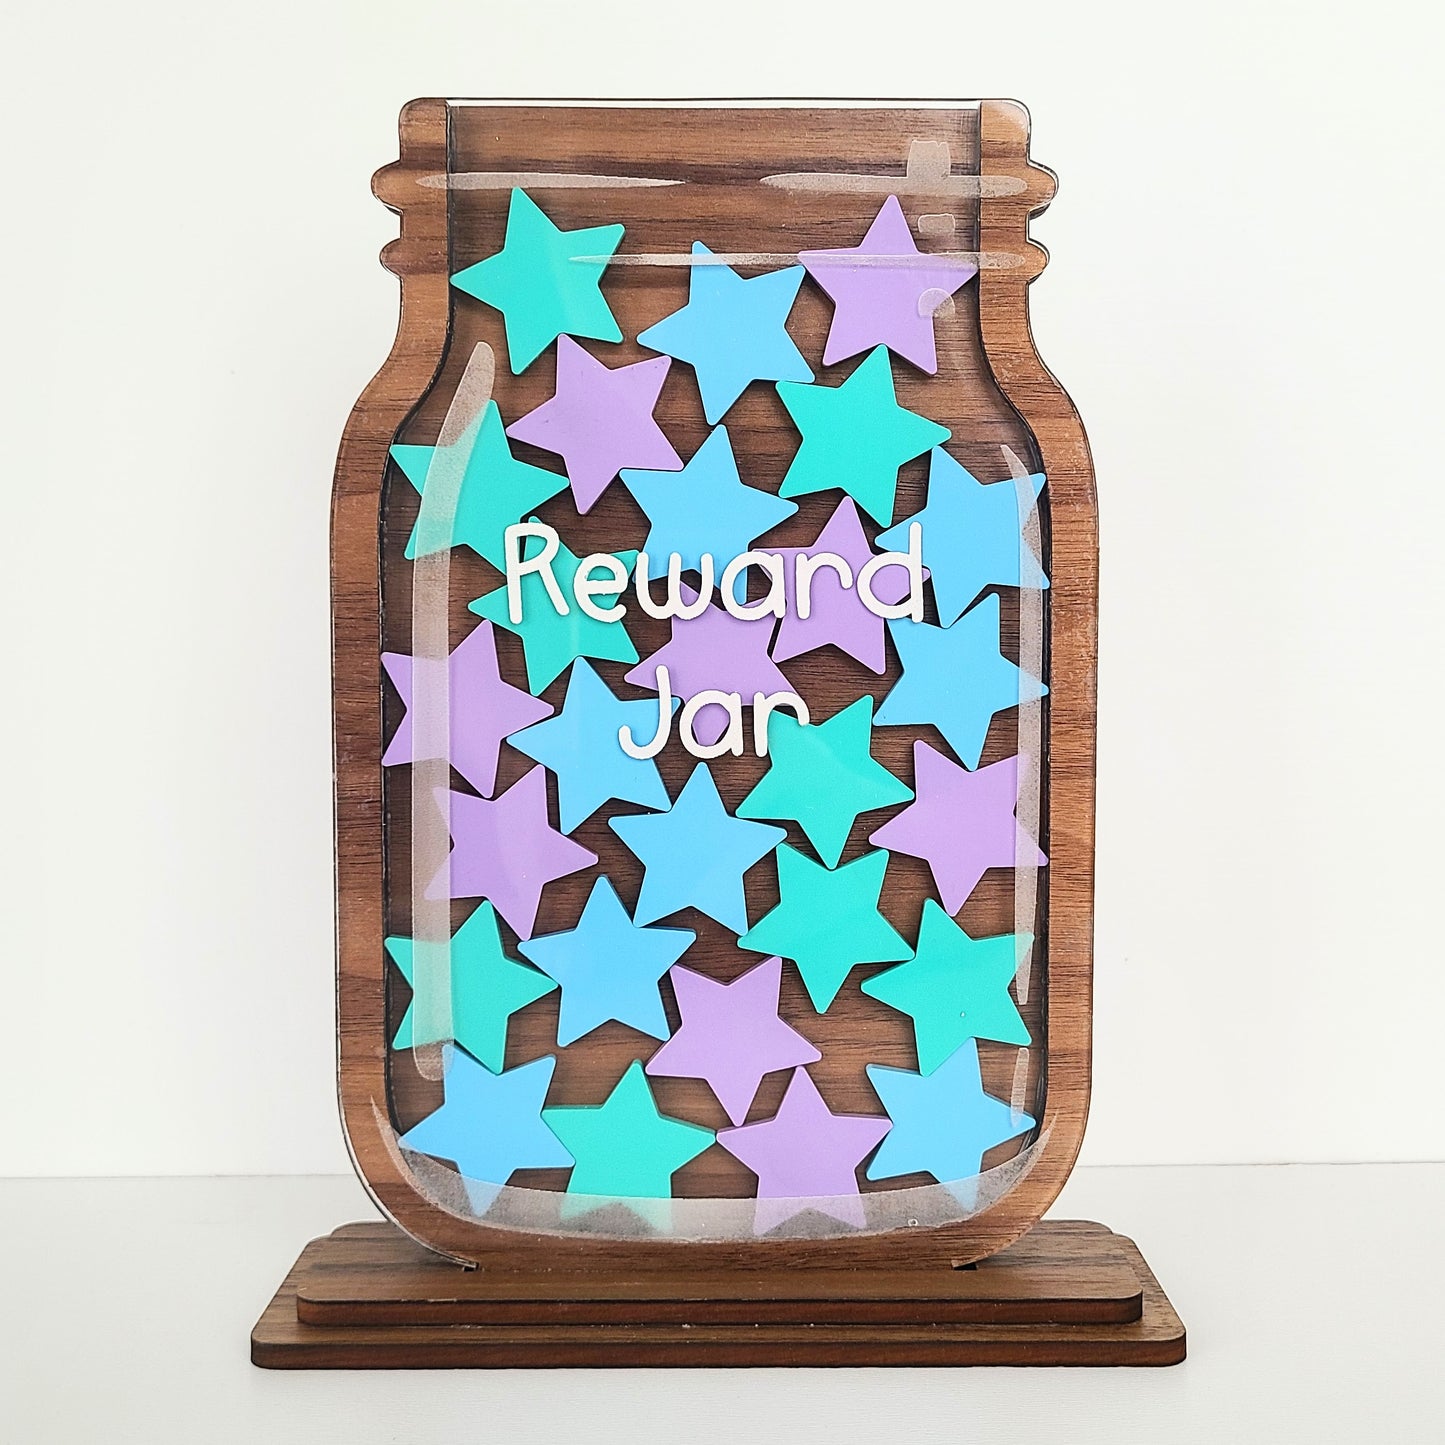 Personalized Reward Jar With Stand